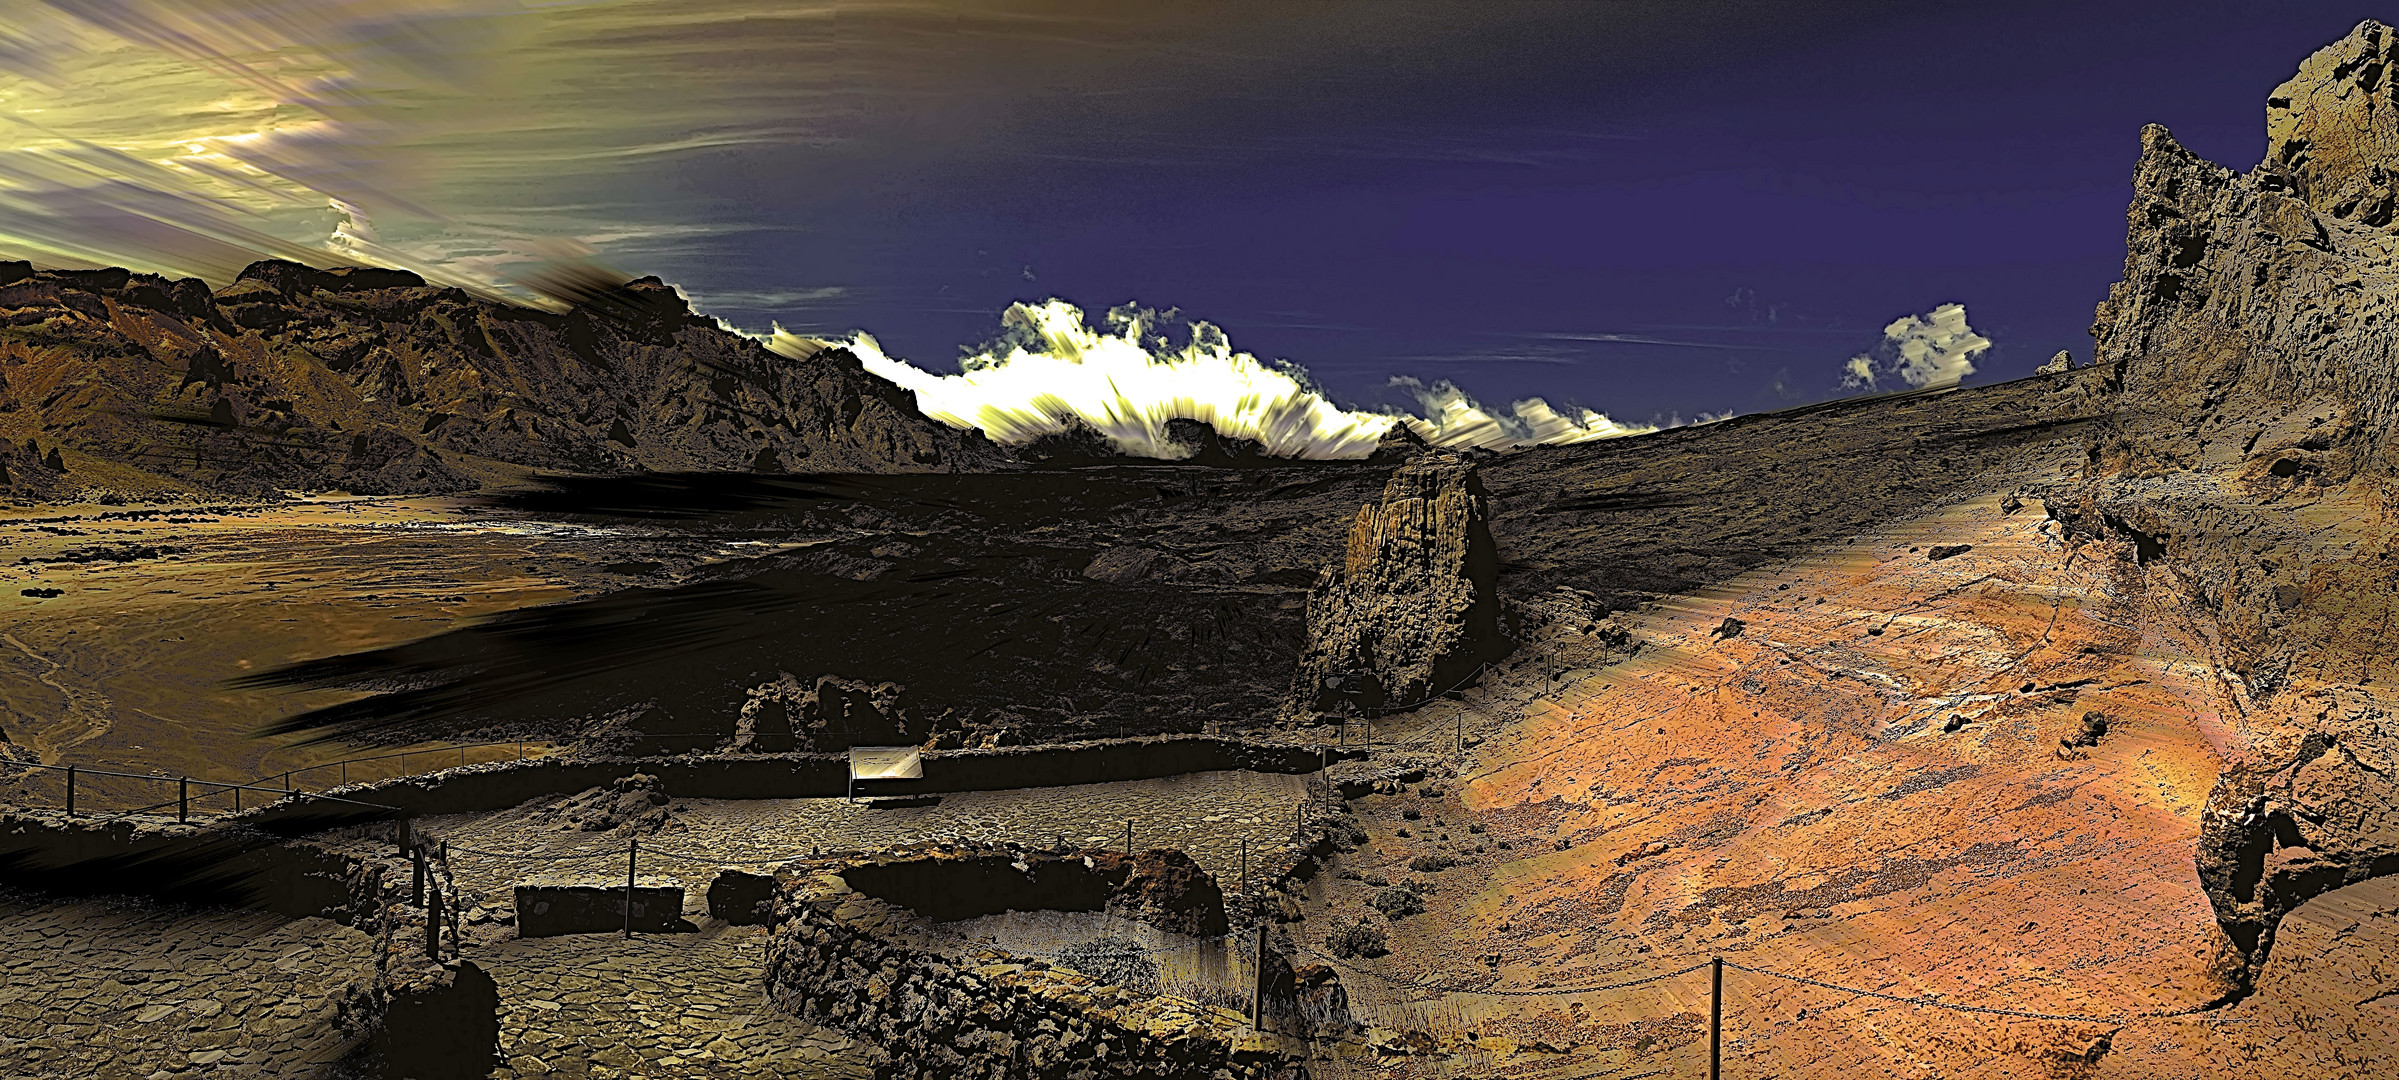 Impressions of teneriffa - Motiv vom Weltenbummler - Piko del Teide - Nationalpark